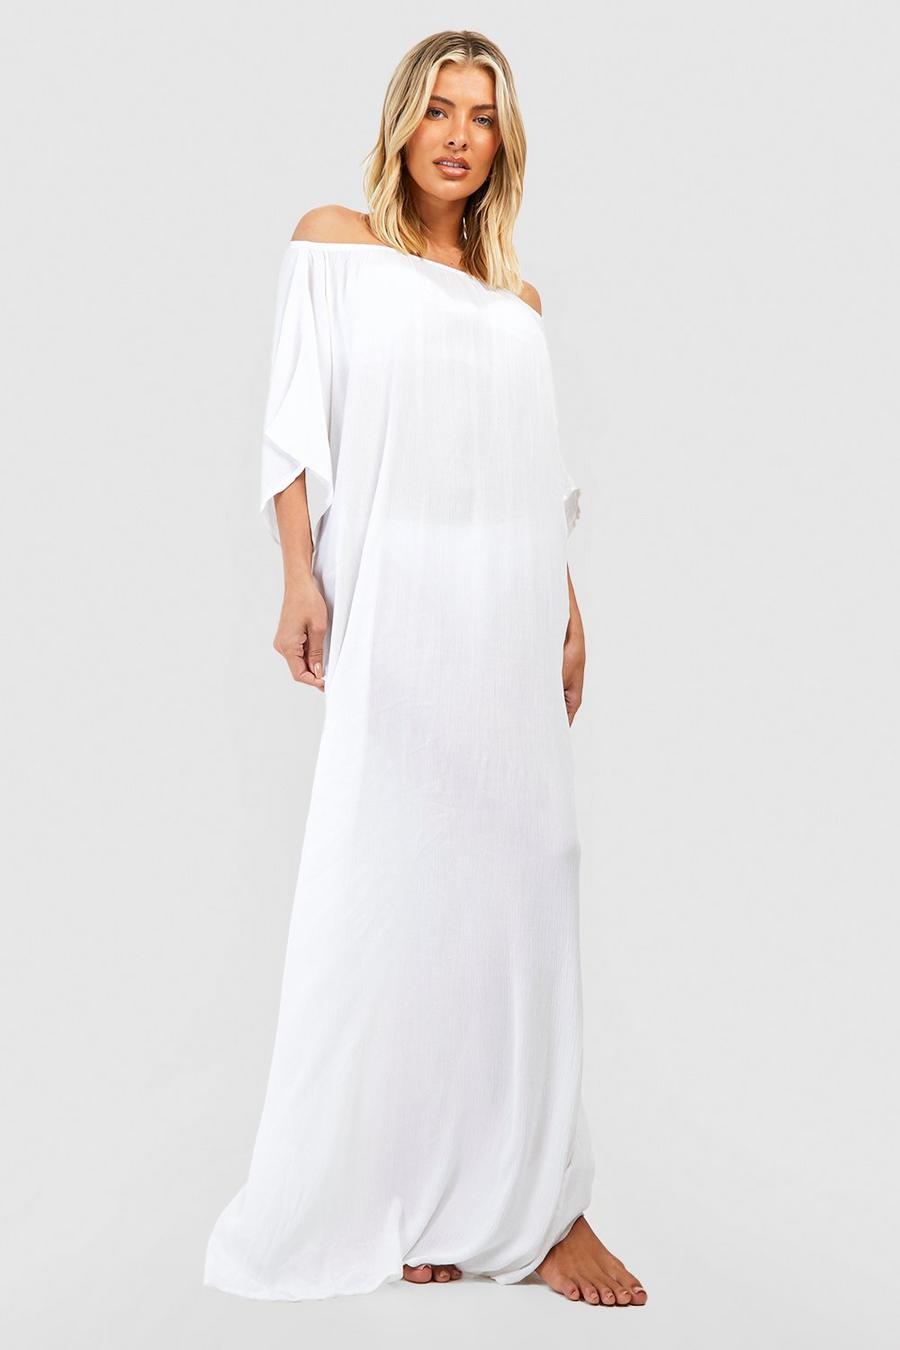 White Off The Shoulder Beach Maxi Dress